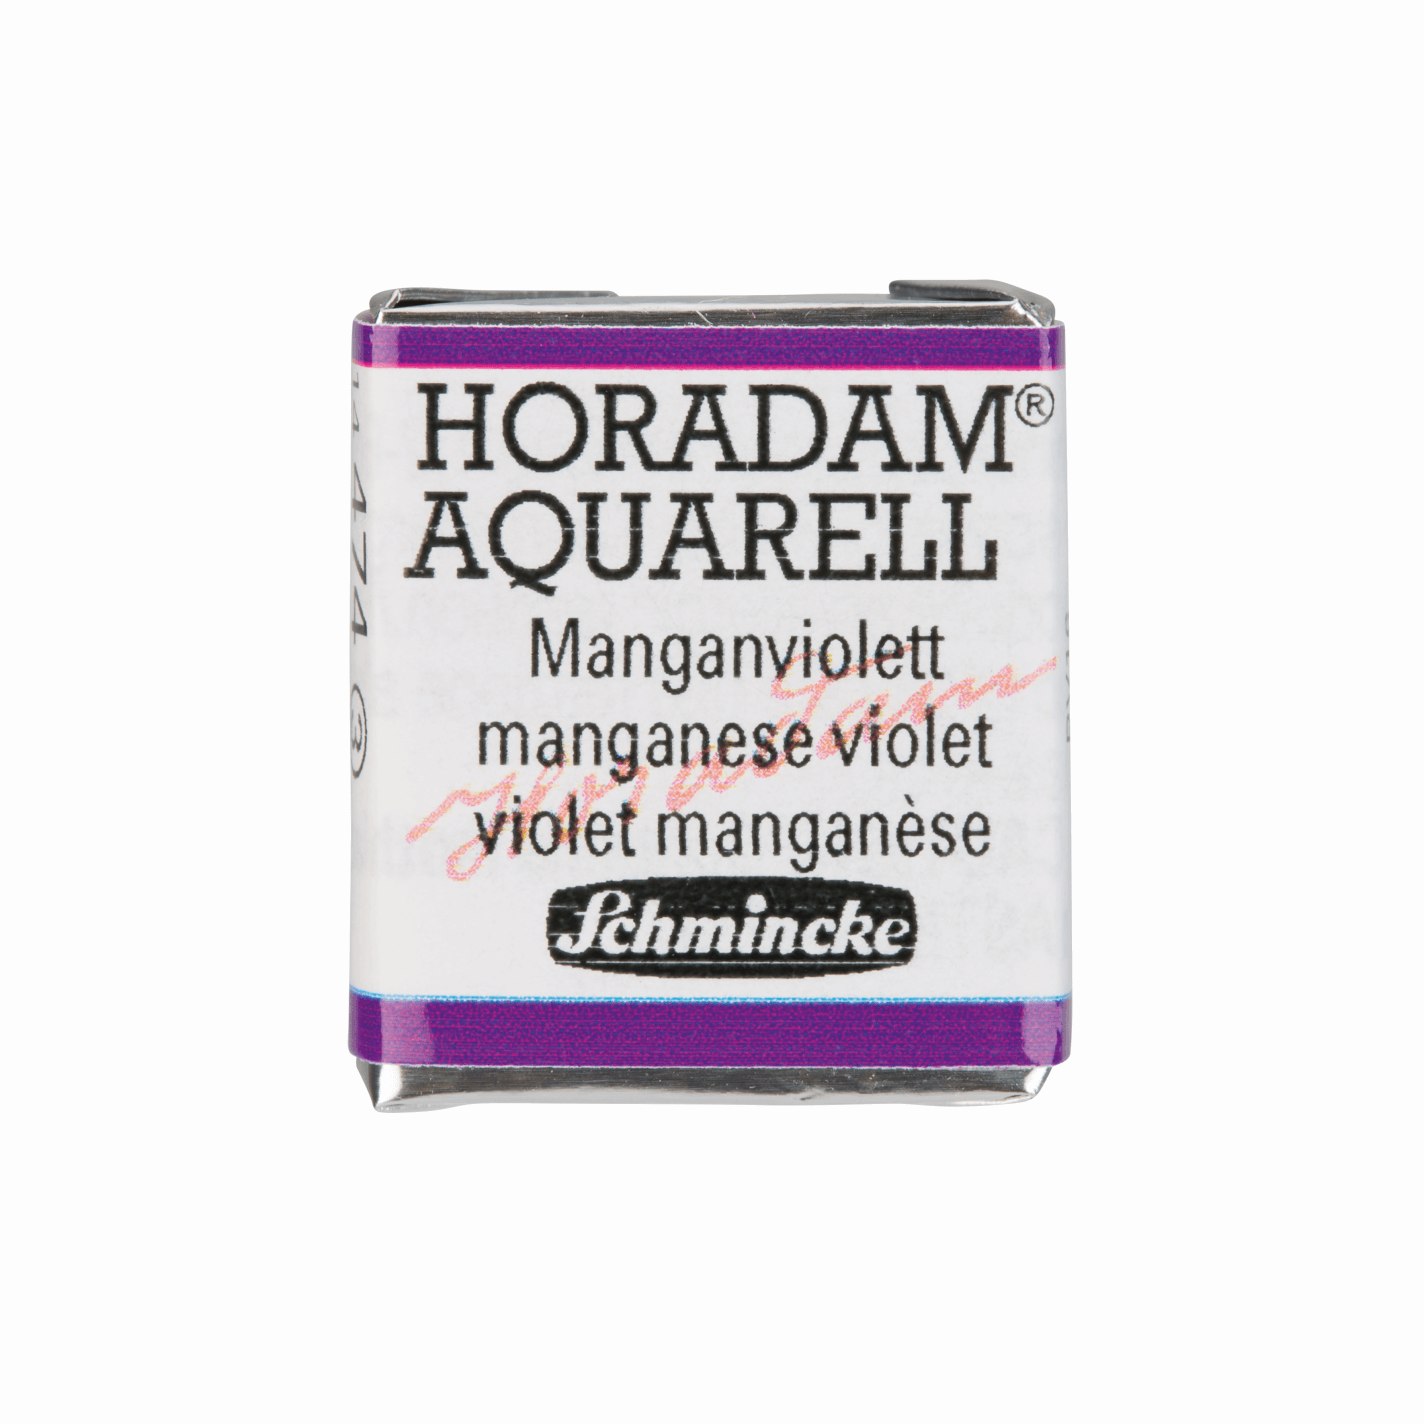 Schmincke Horadam Aquarell pans 1/2 pan Manganese Violet